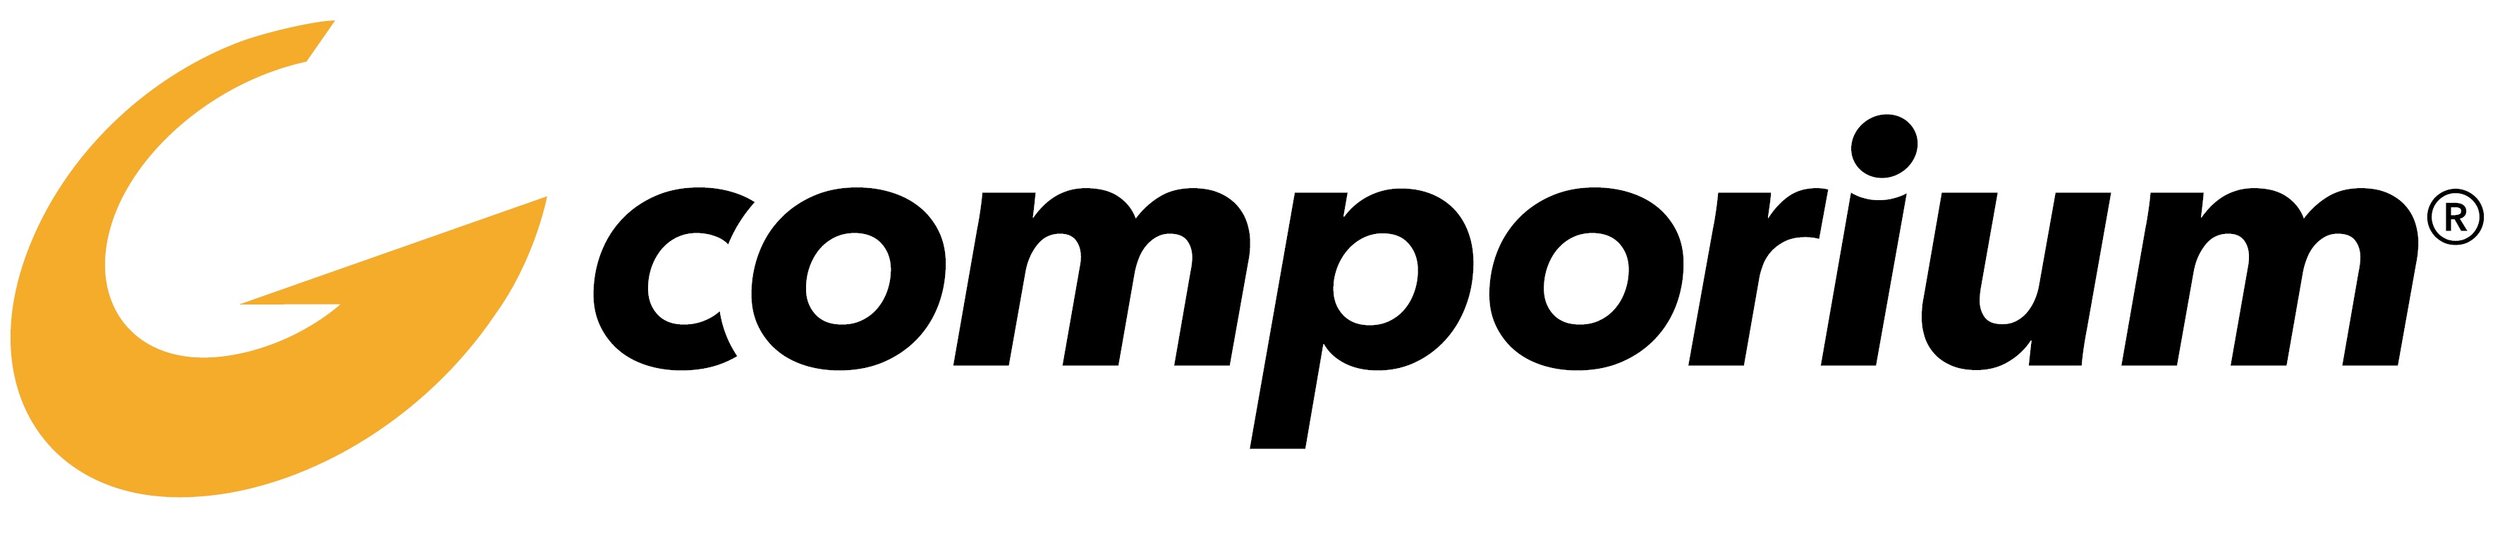 Comporium logo.jpg